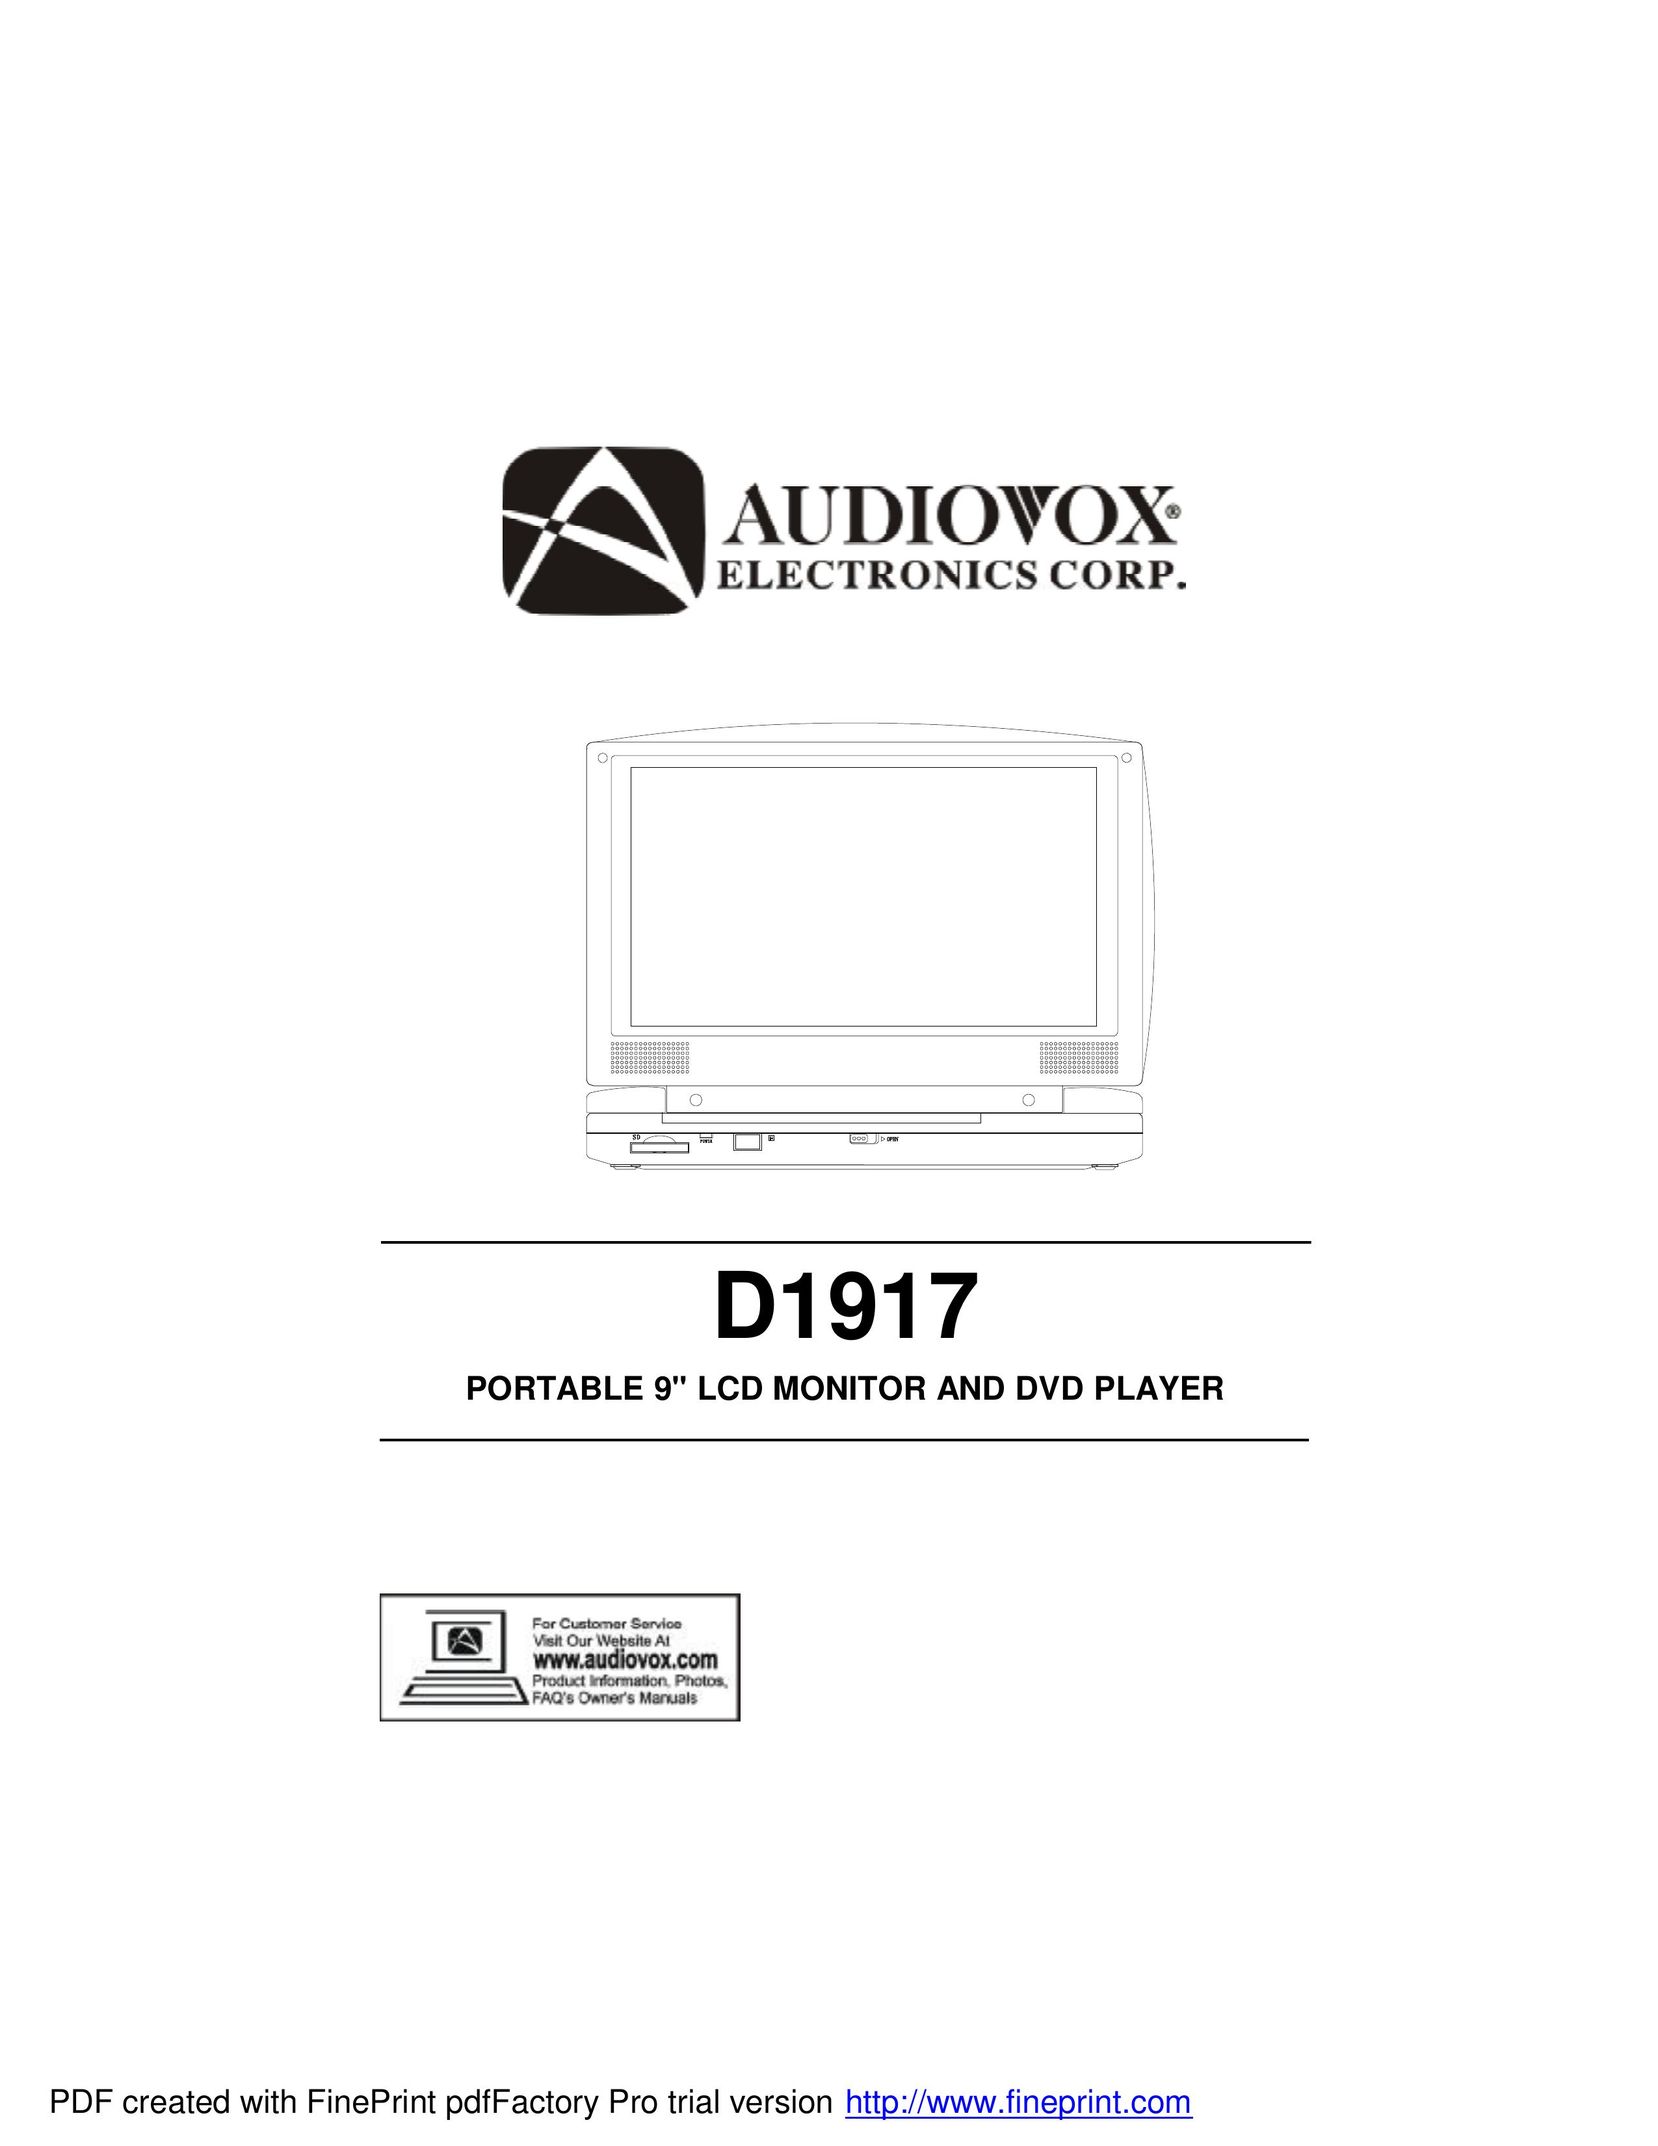 Audiovox D1917 DVD Player User Manual